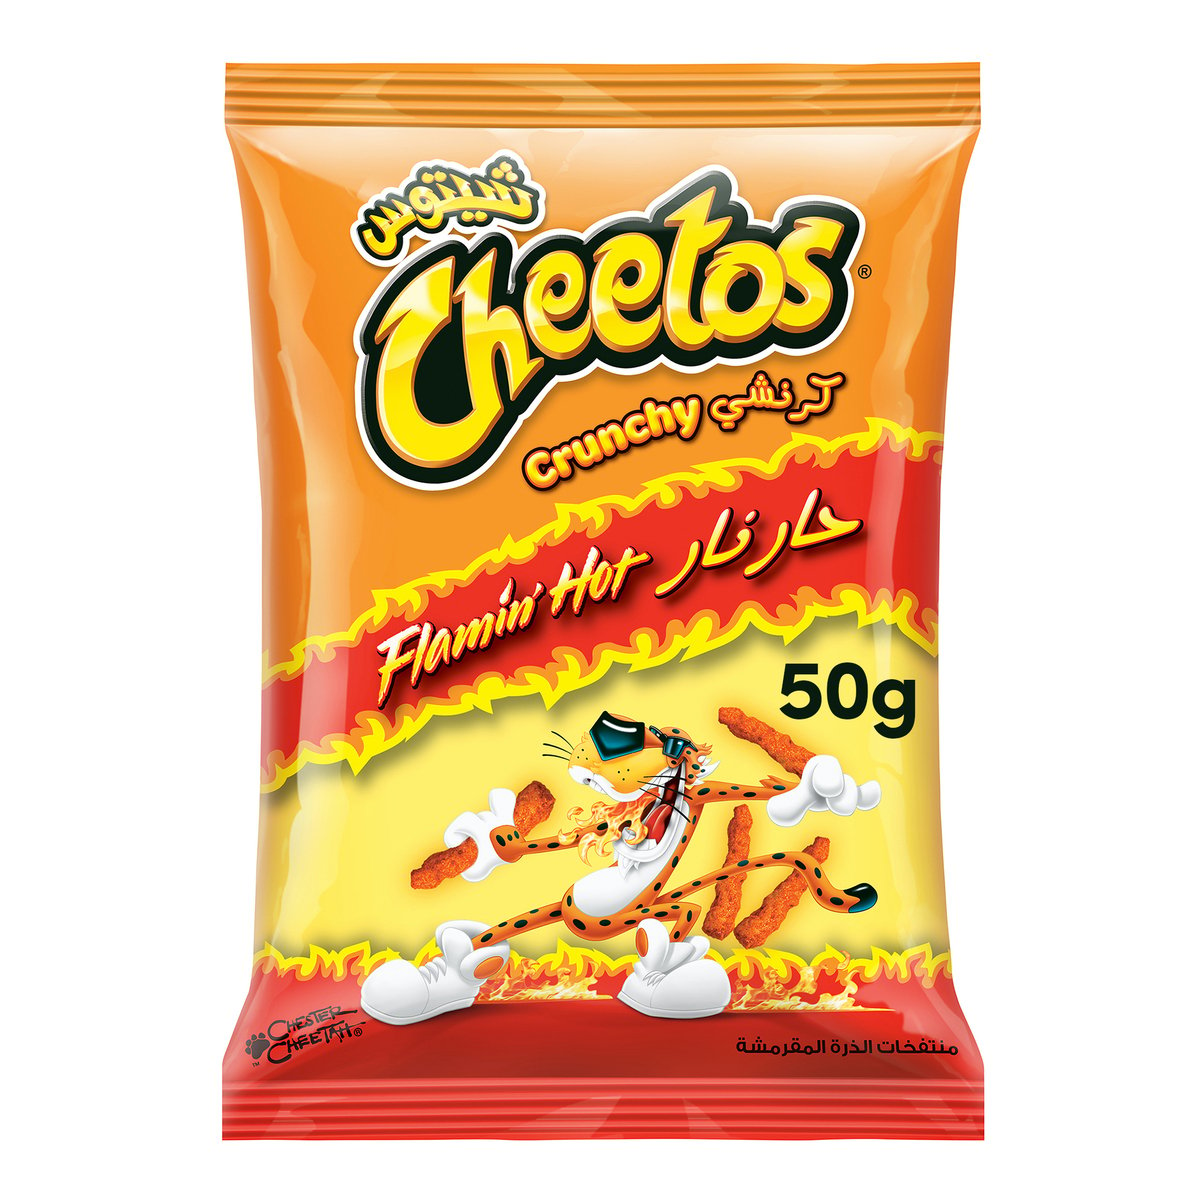 12 Pack X Cheetos Crunchy Salted Caramel Flavor Corn Chips (25